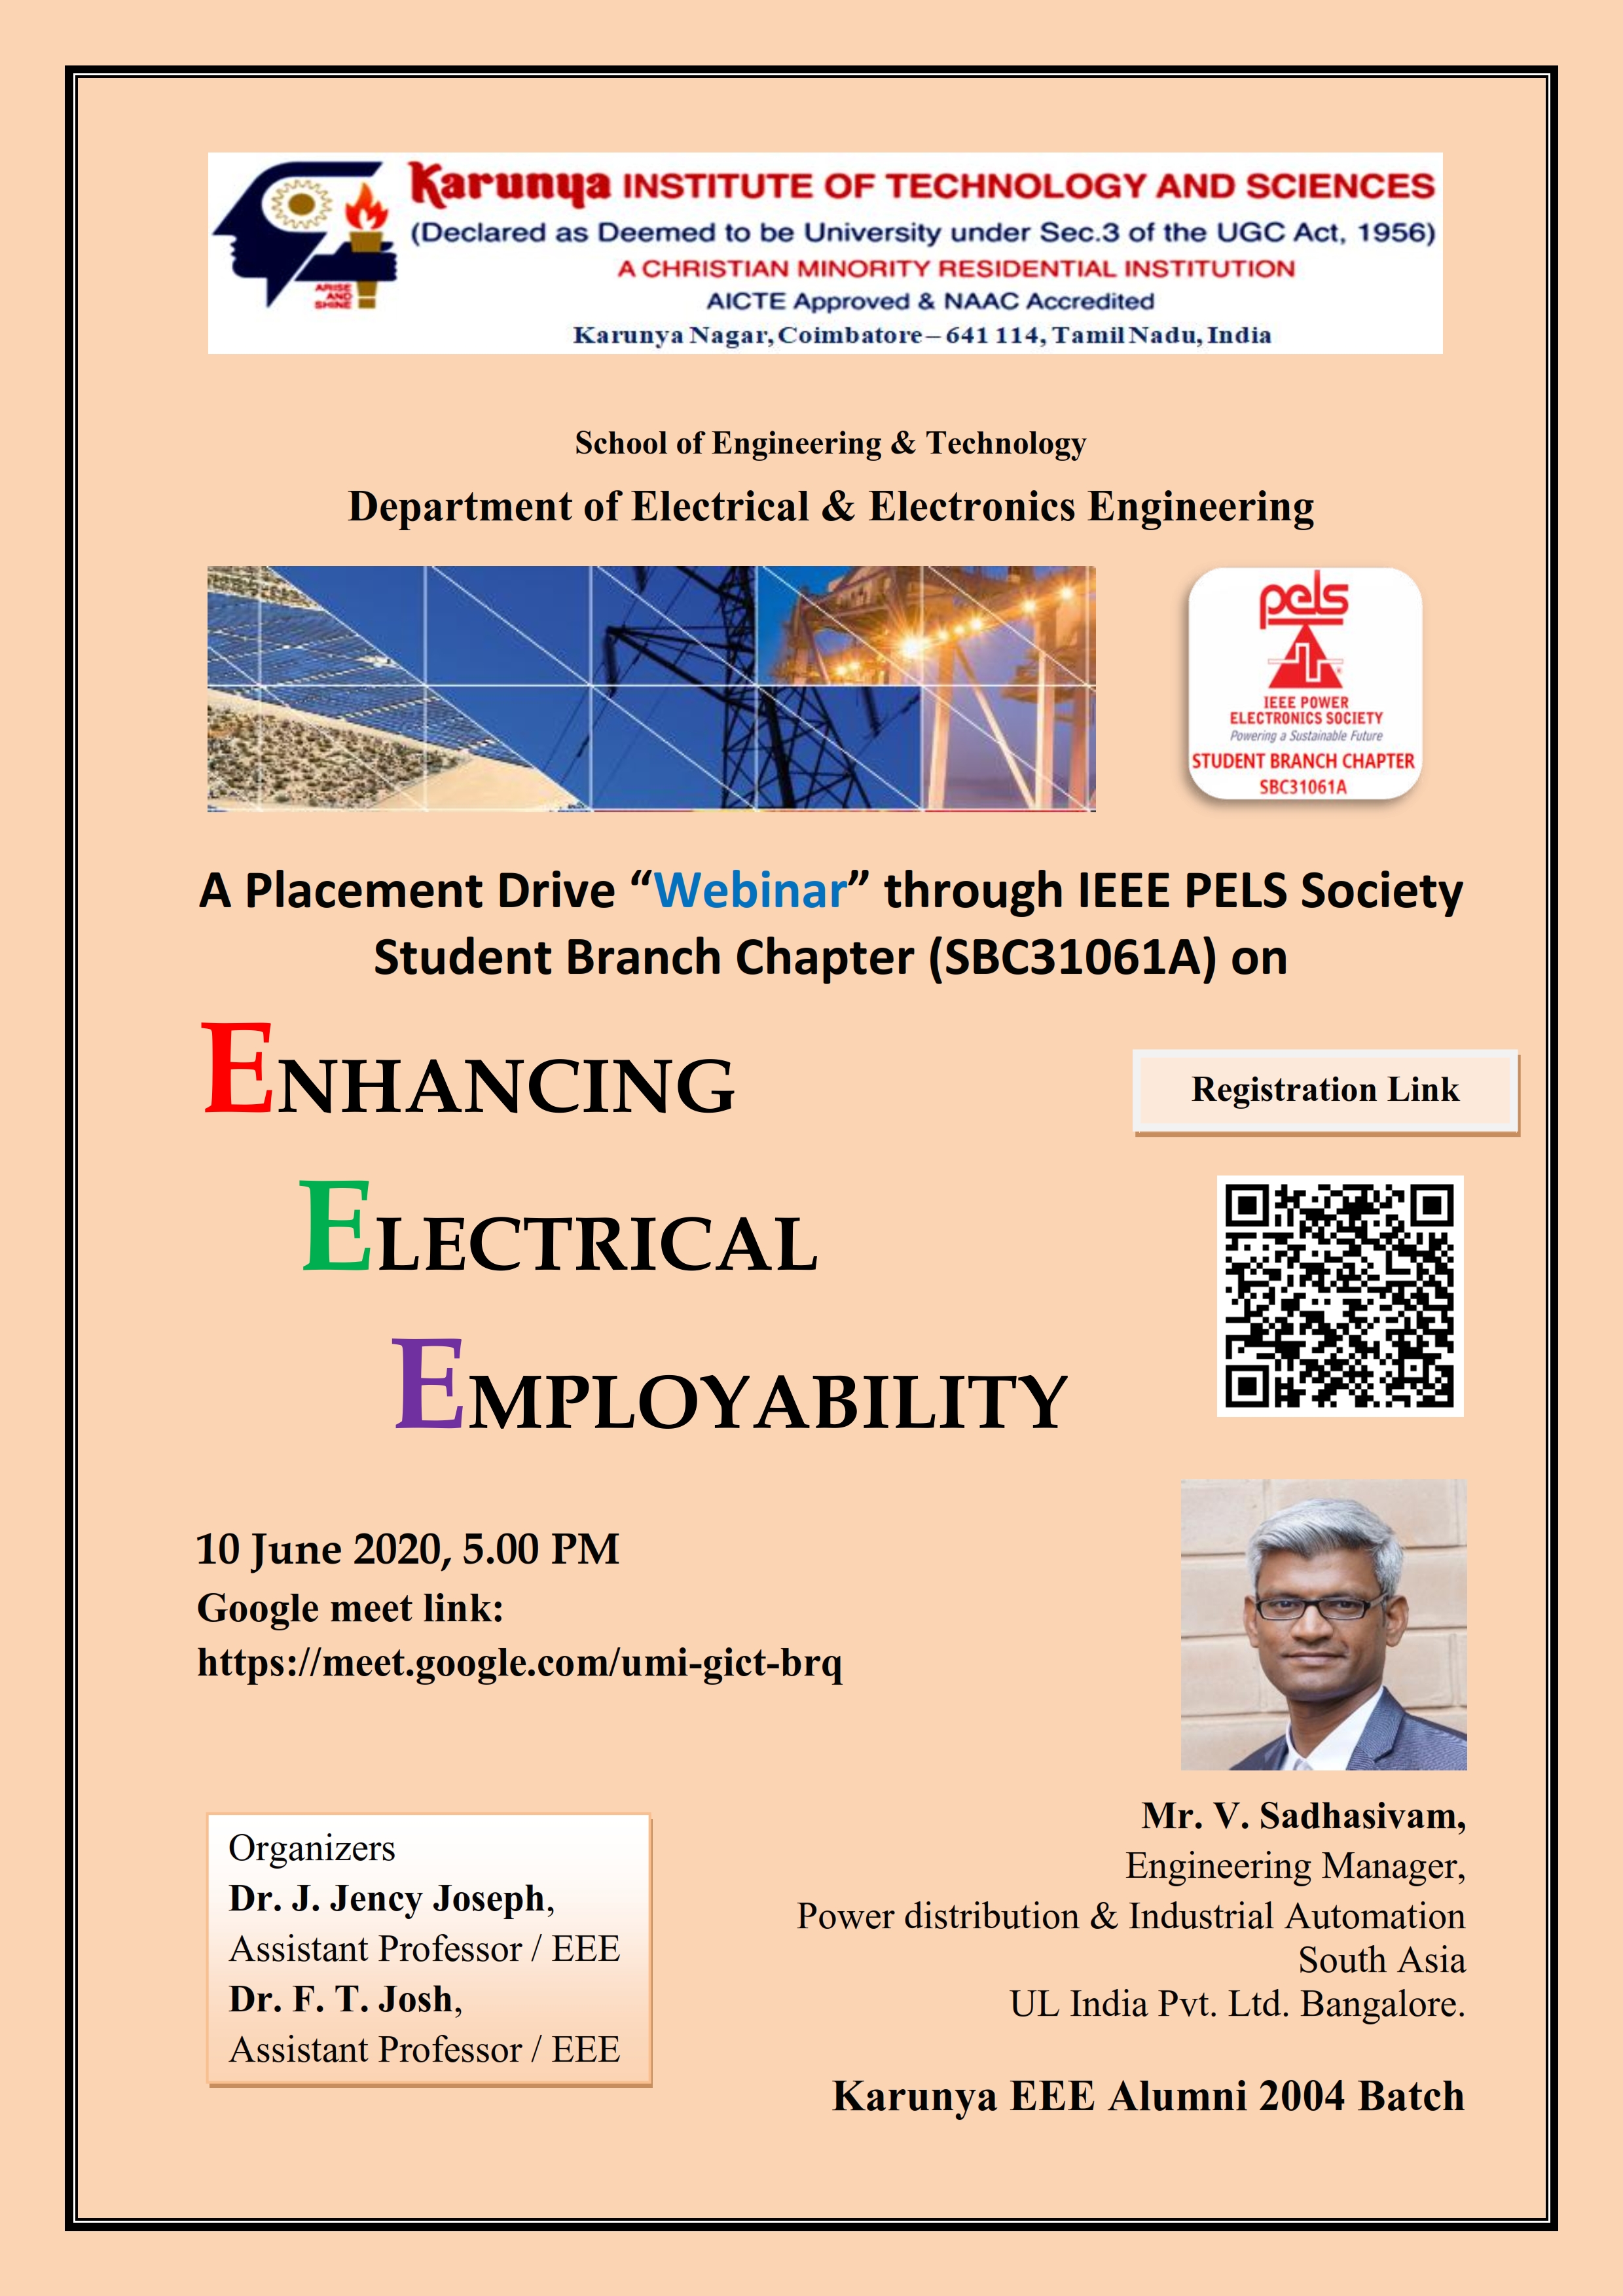 Enhancing Electrical Employability - poster